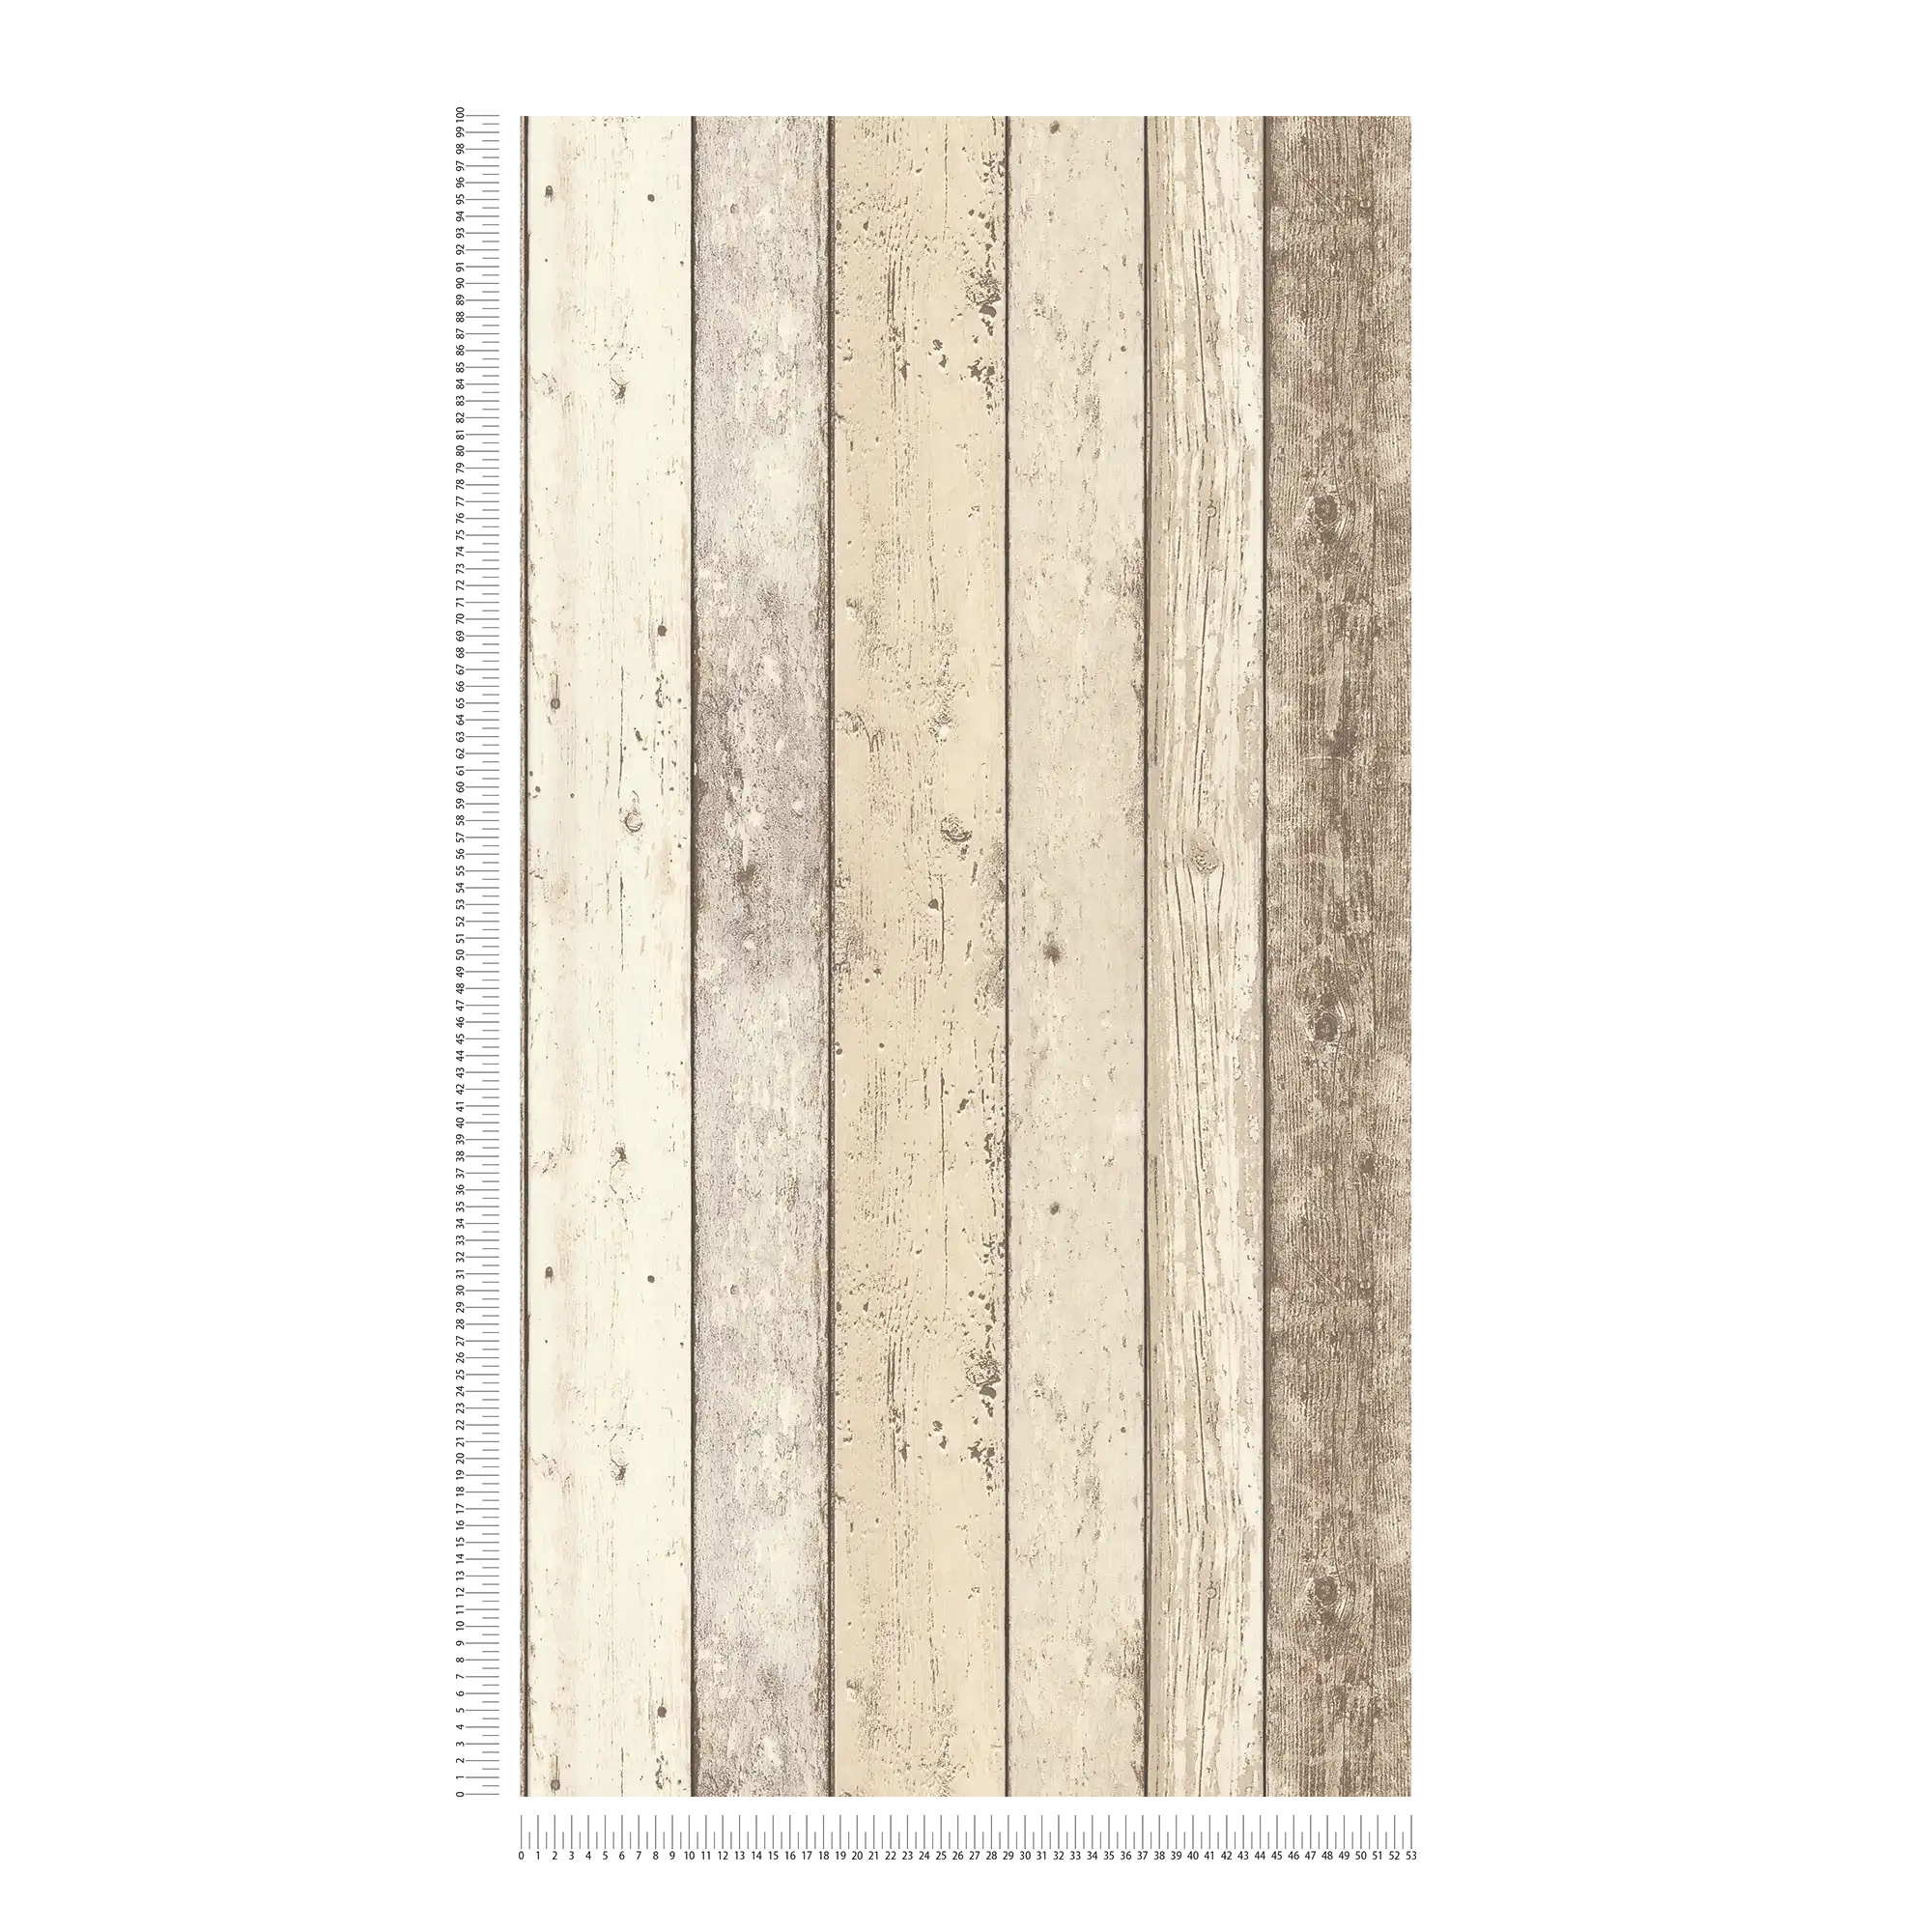             Rustikale Bretter-Tapete mit Holzbrettern im Used-Look – Beige, Braun, Weiß
        